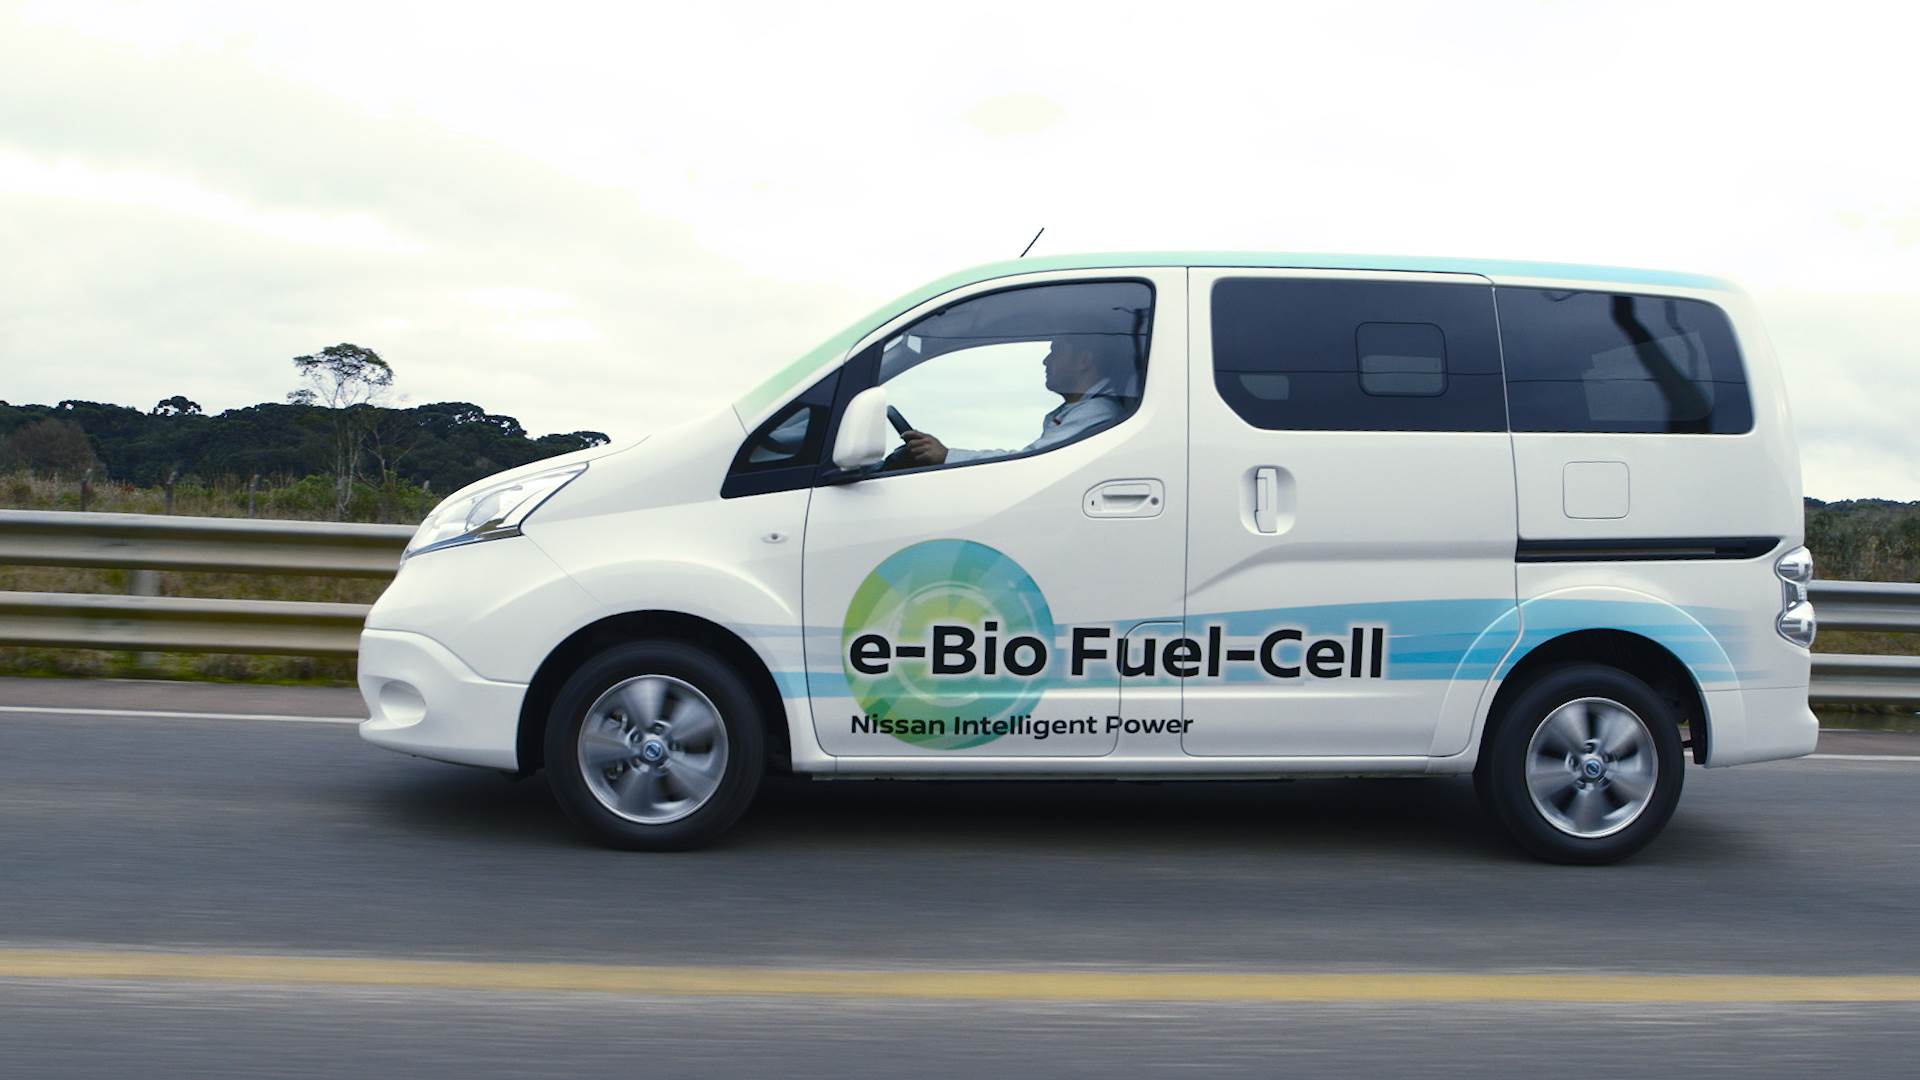 nissan-e-bio-fuel-cell-prototype-vehicle-015-source